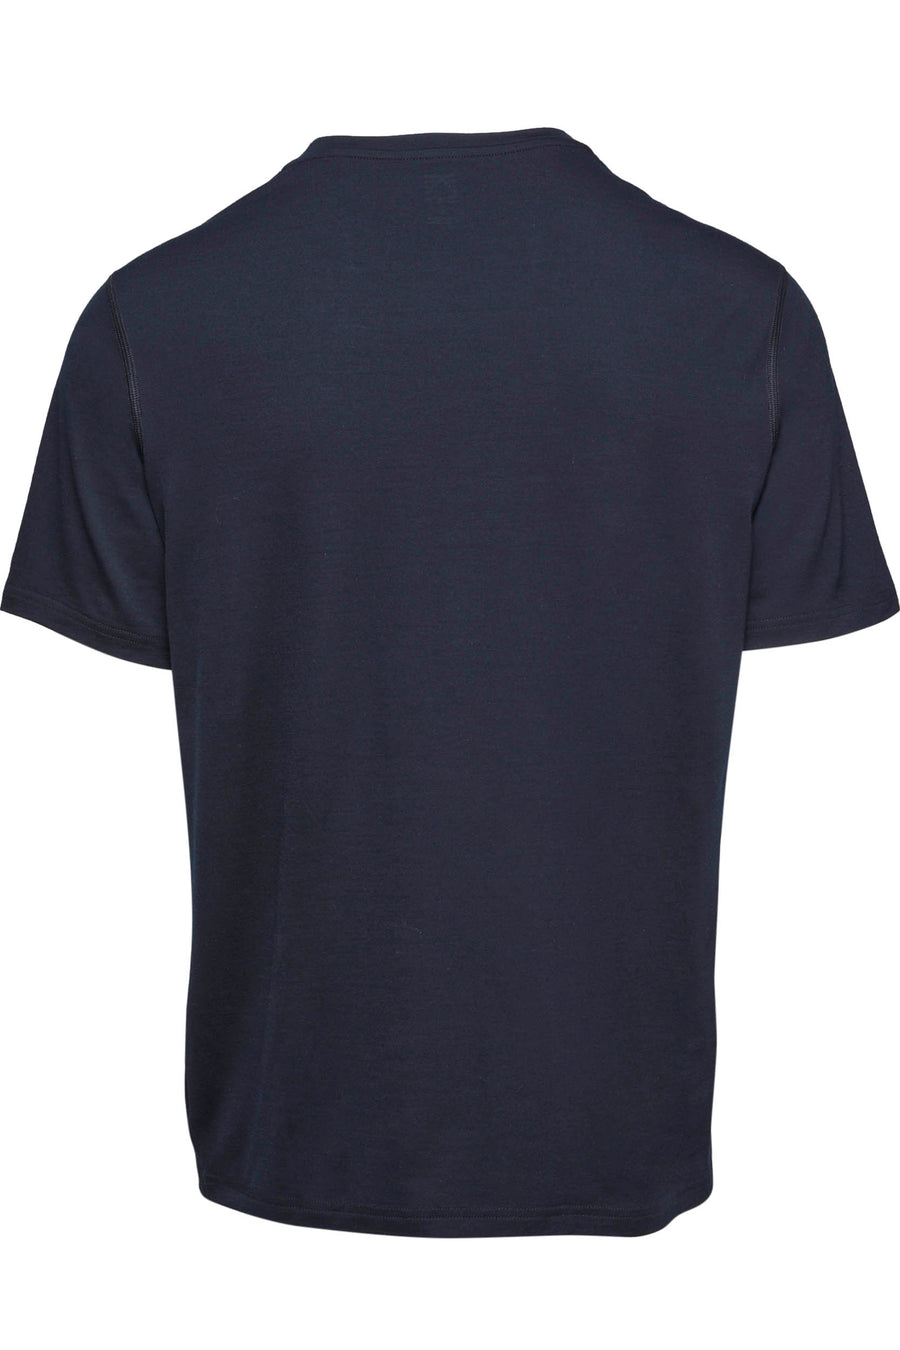 Foehn Jersey Keats Merino T-Shirt